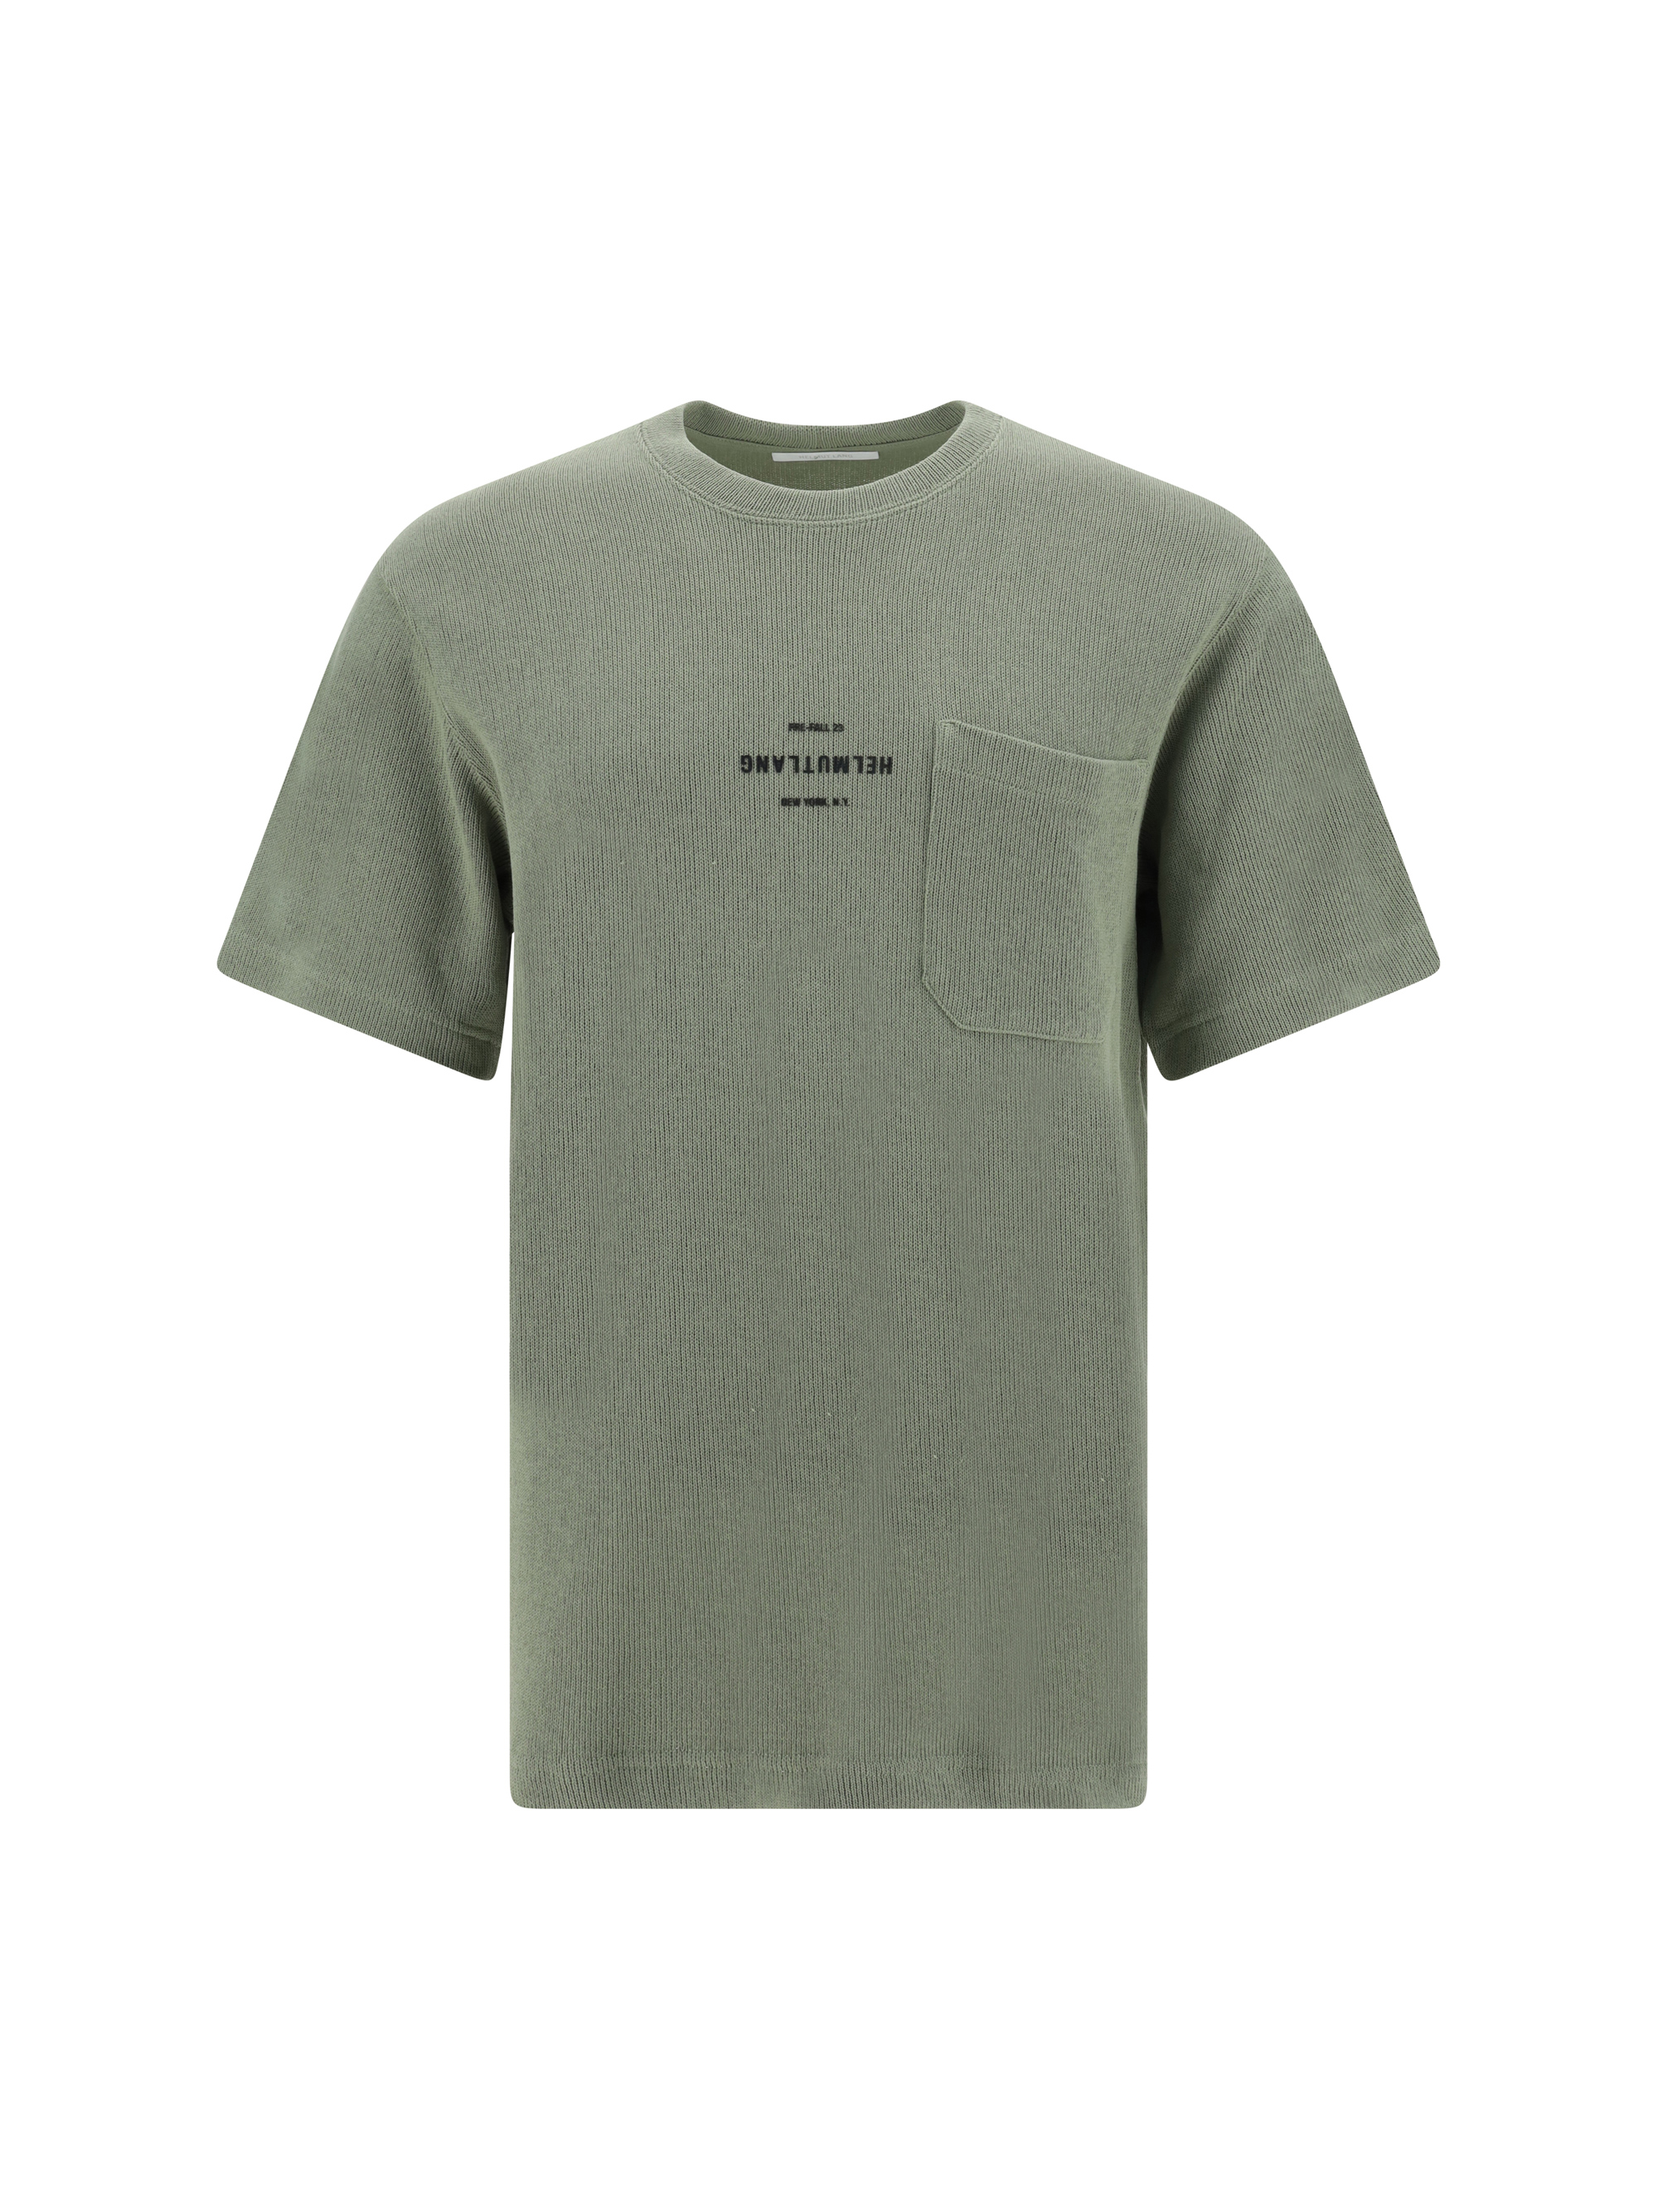 helmut lang - t-shirt